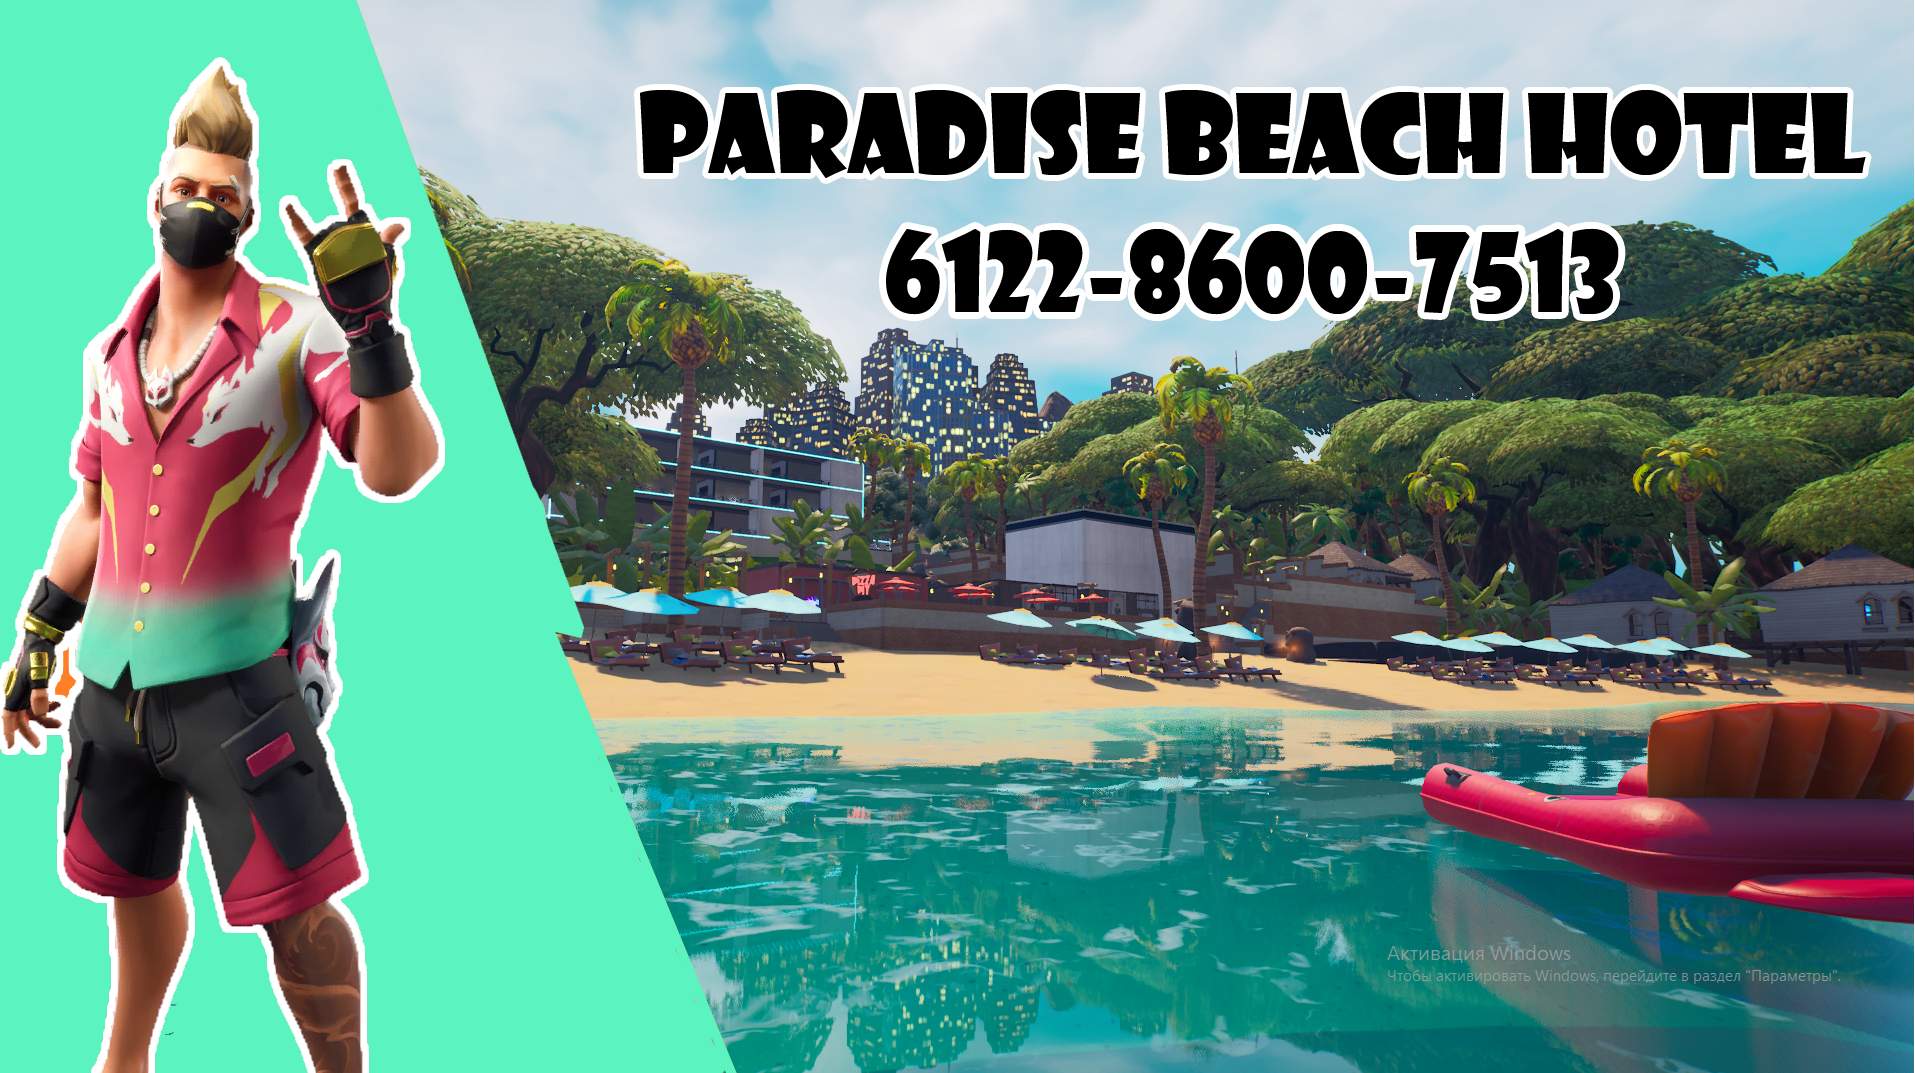 Paradise beach hotel 6122-8600-7513